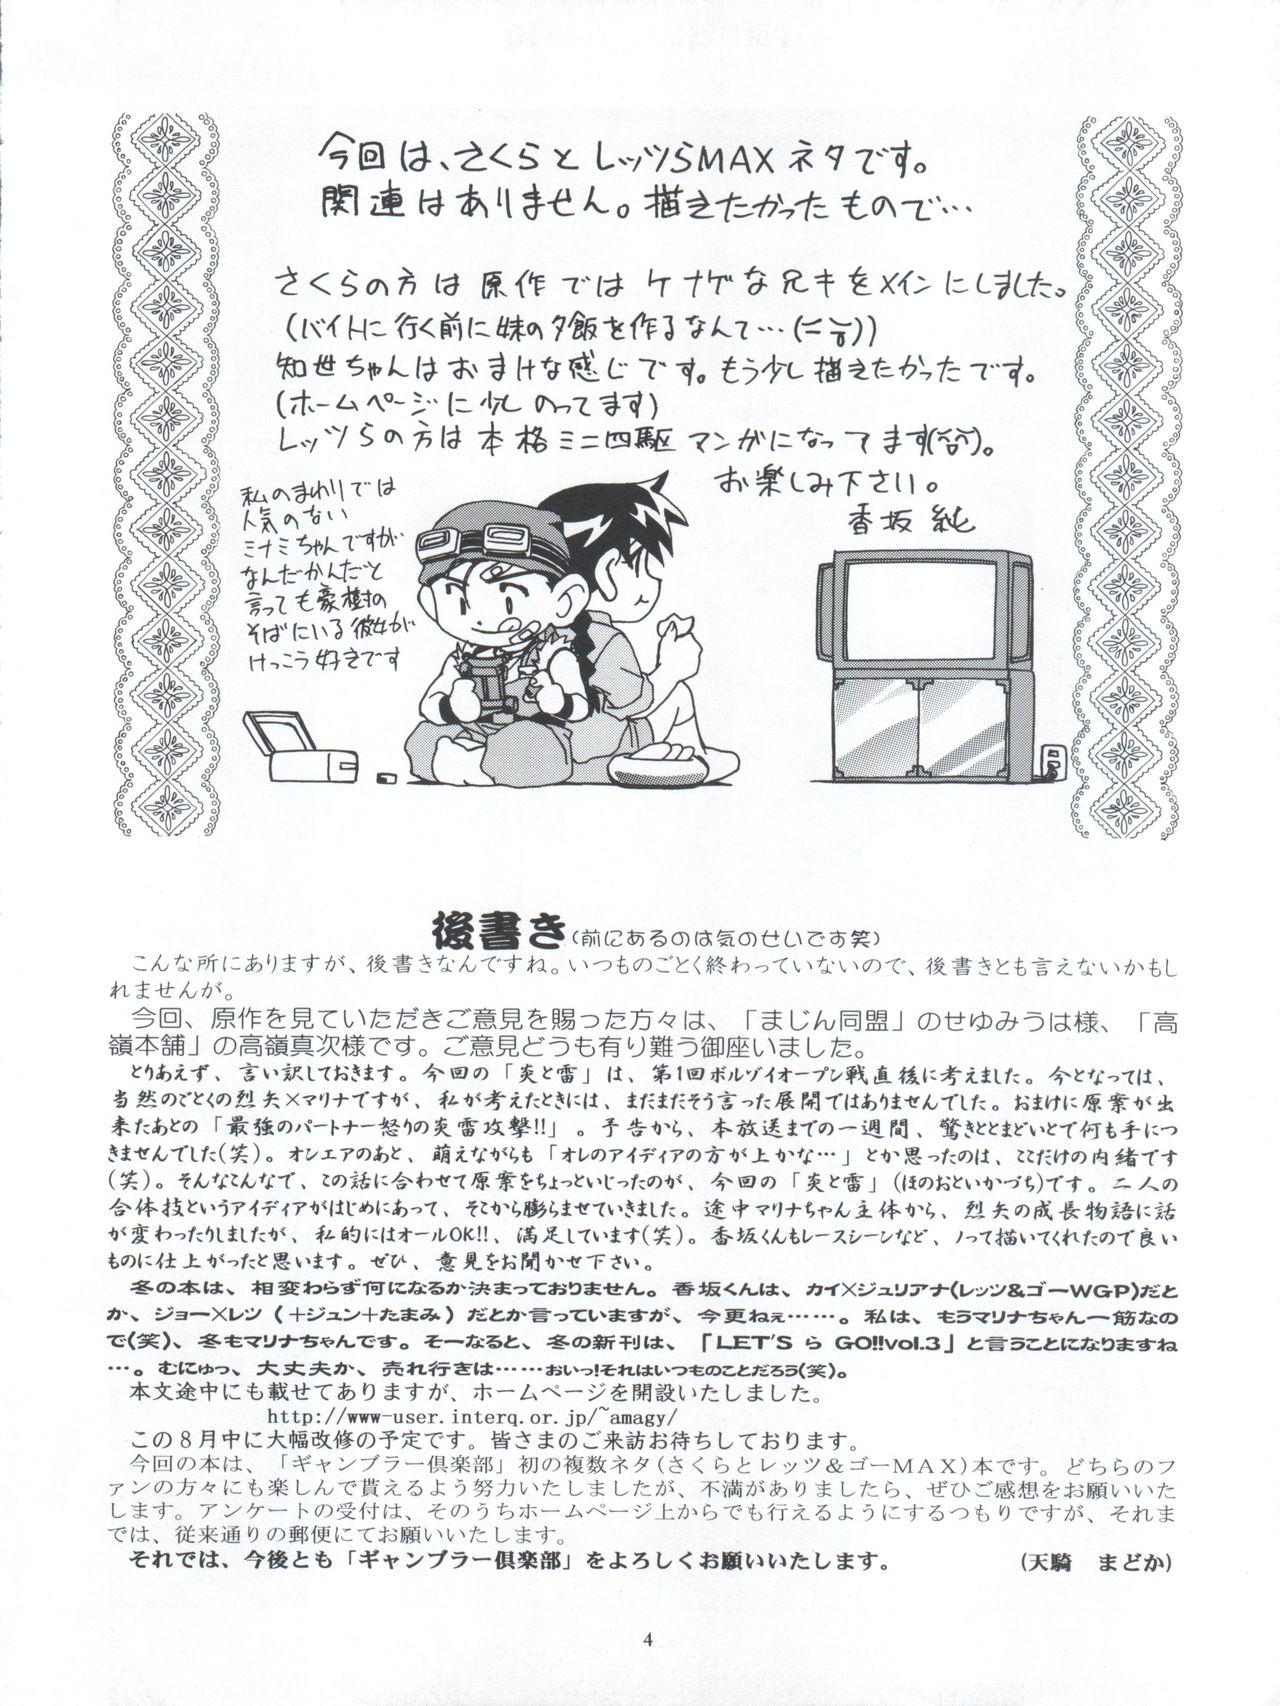 Pawg LET'S Ra MIX - Cardcaptor sakura Bakusou kyoudai lets and go Socks - Page 4